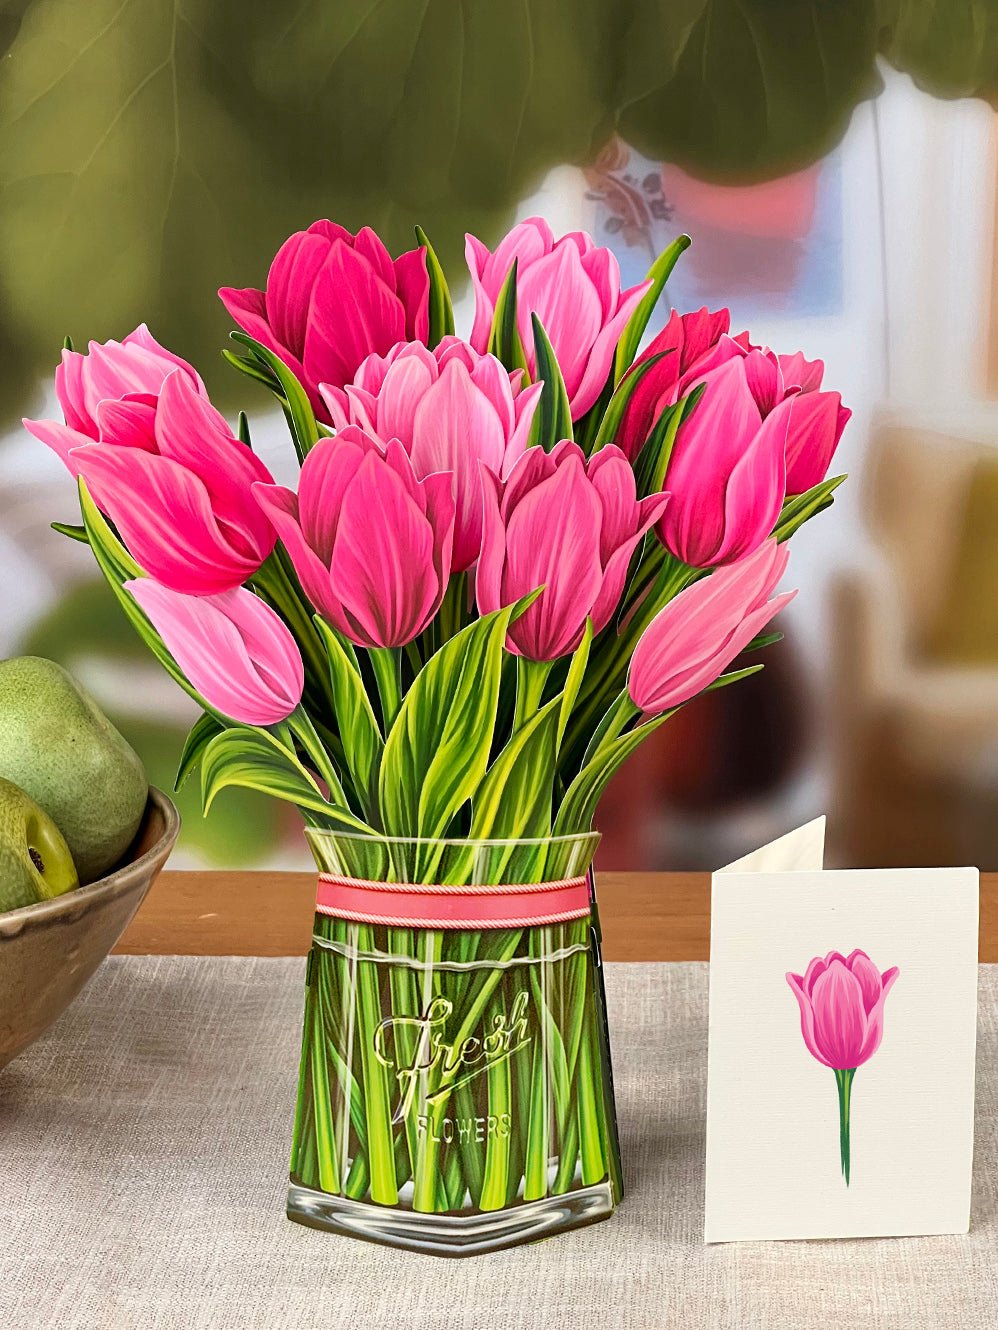 Pink Tulips - FreshCut Paper